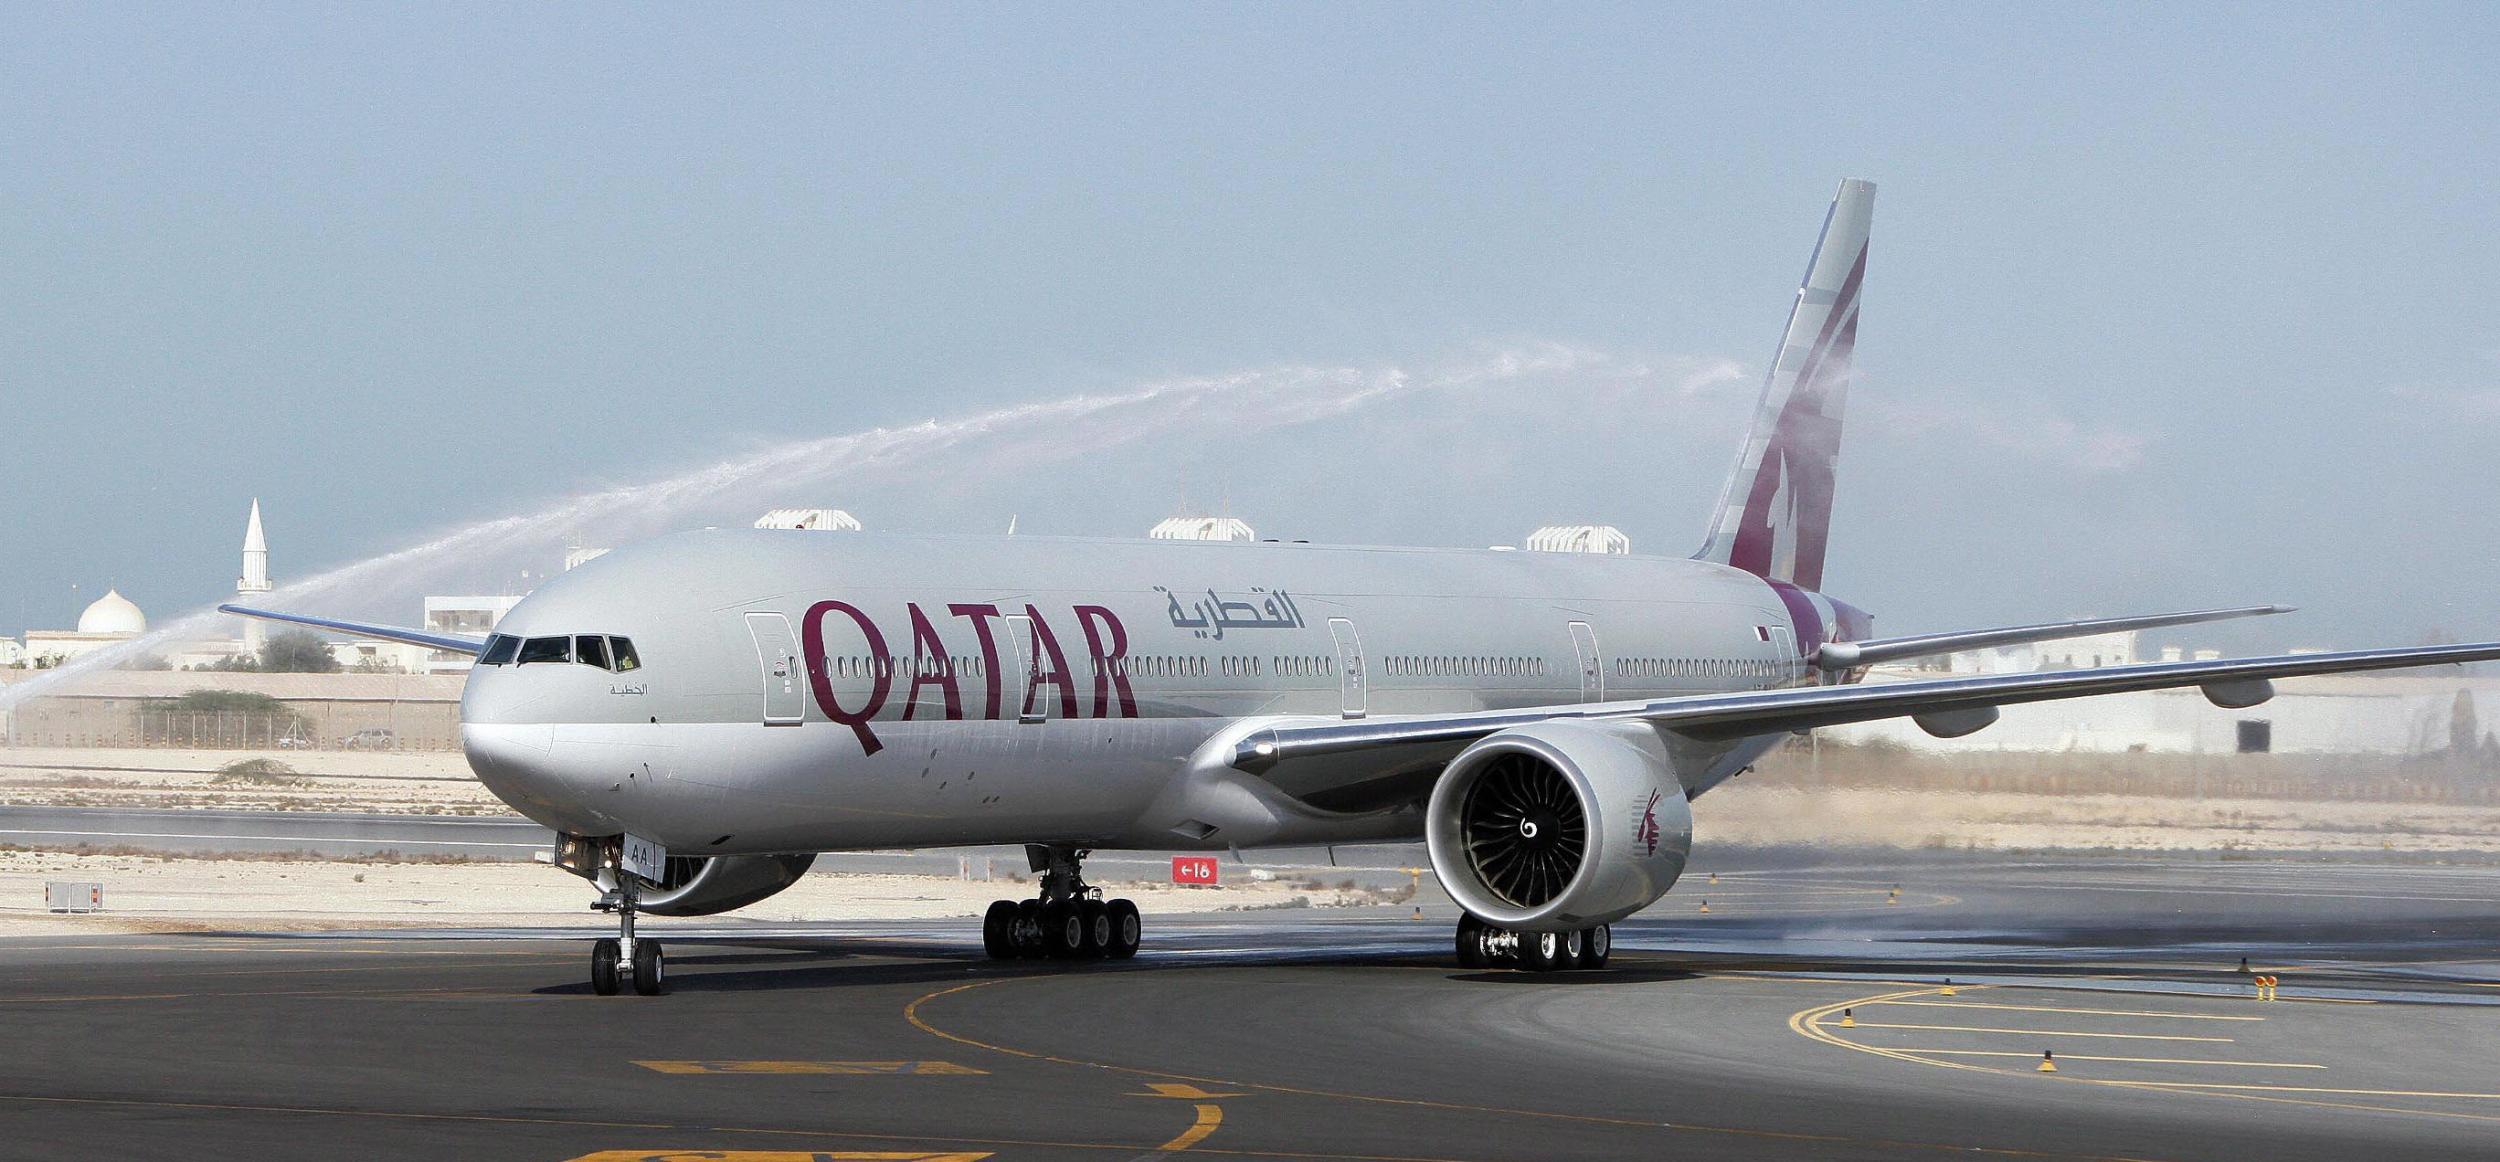 Qatar Airways begins operating the world's longest flight this weekend